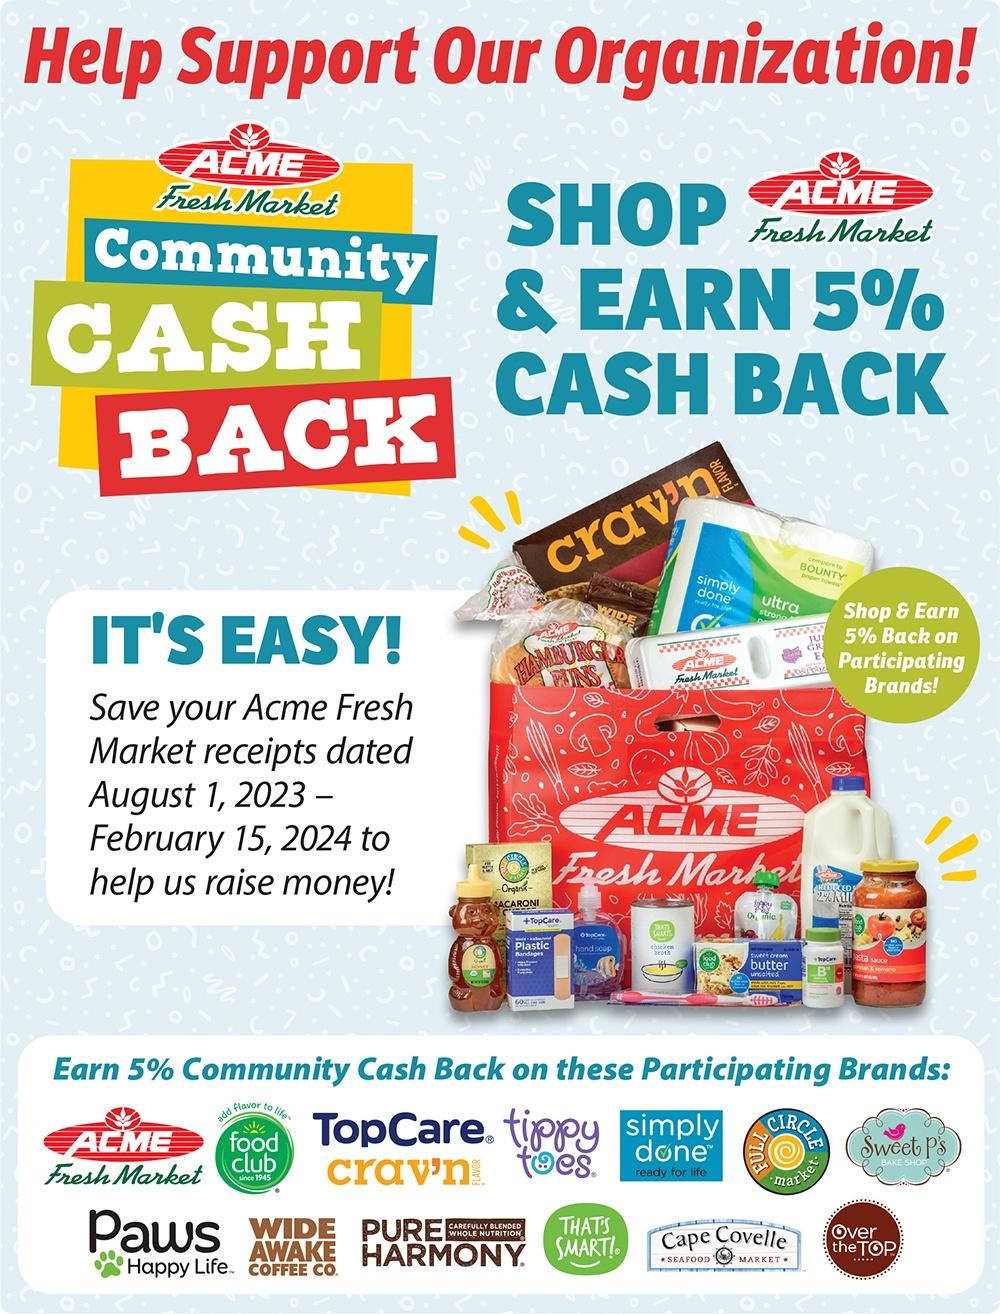 Acme Fresh Market’s Community Cash Back program PBS Western Reserve